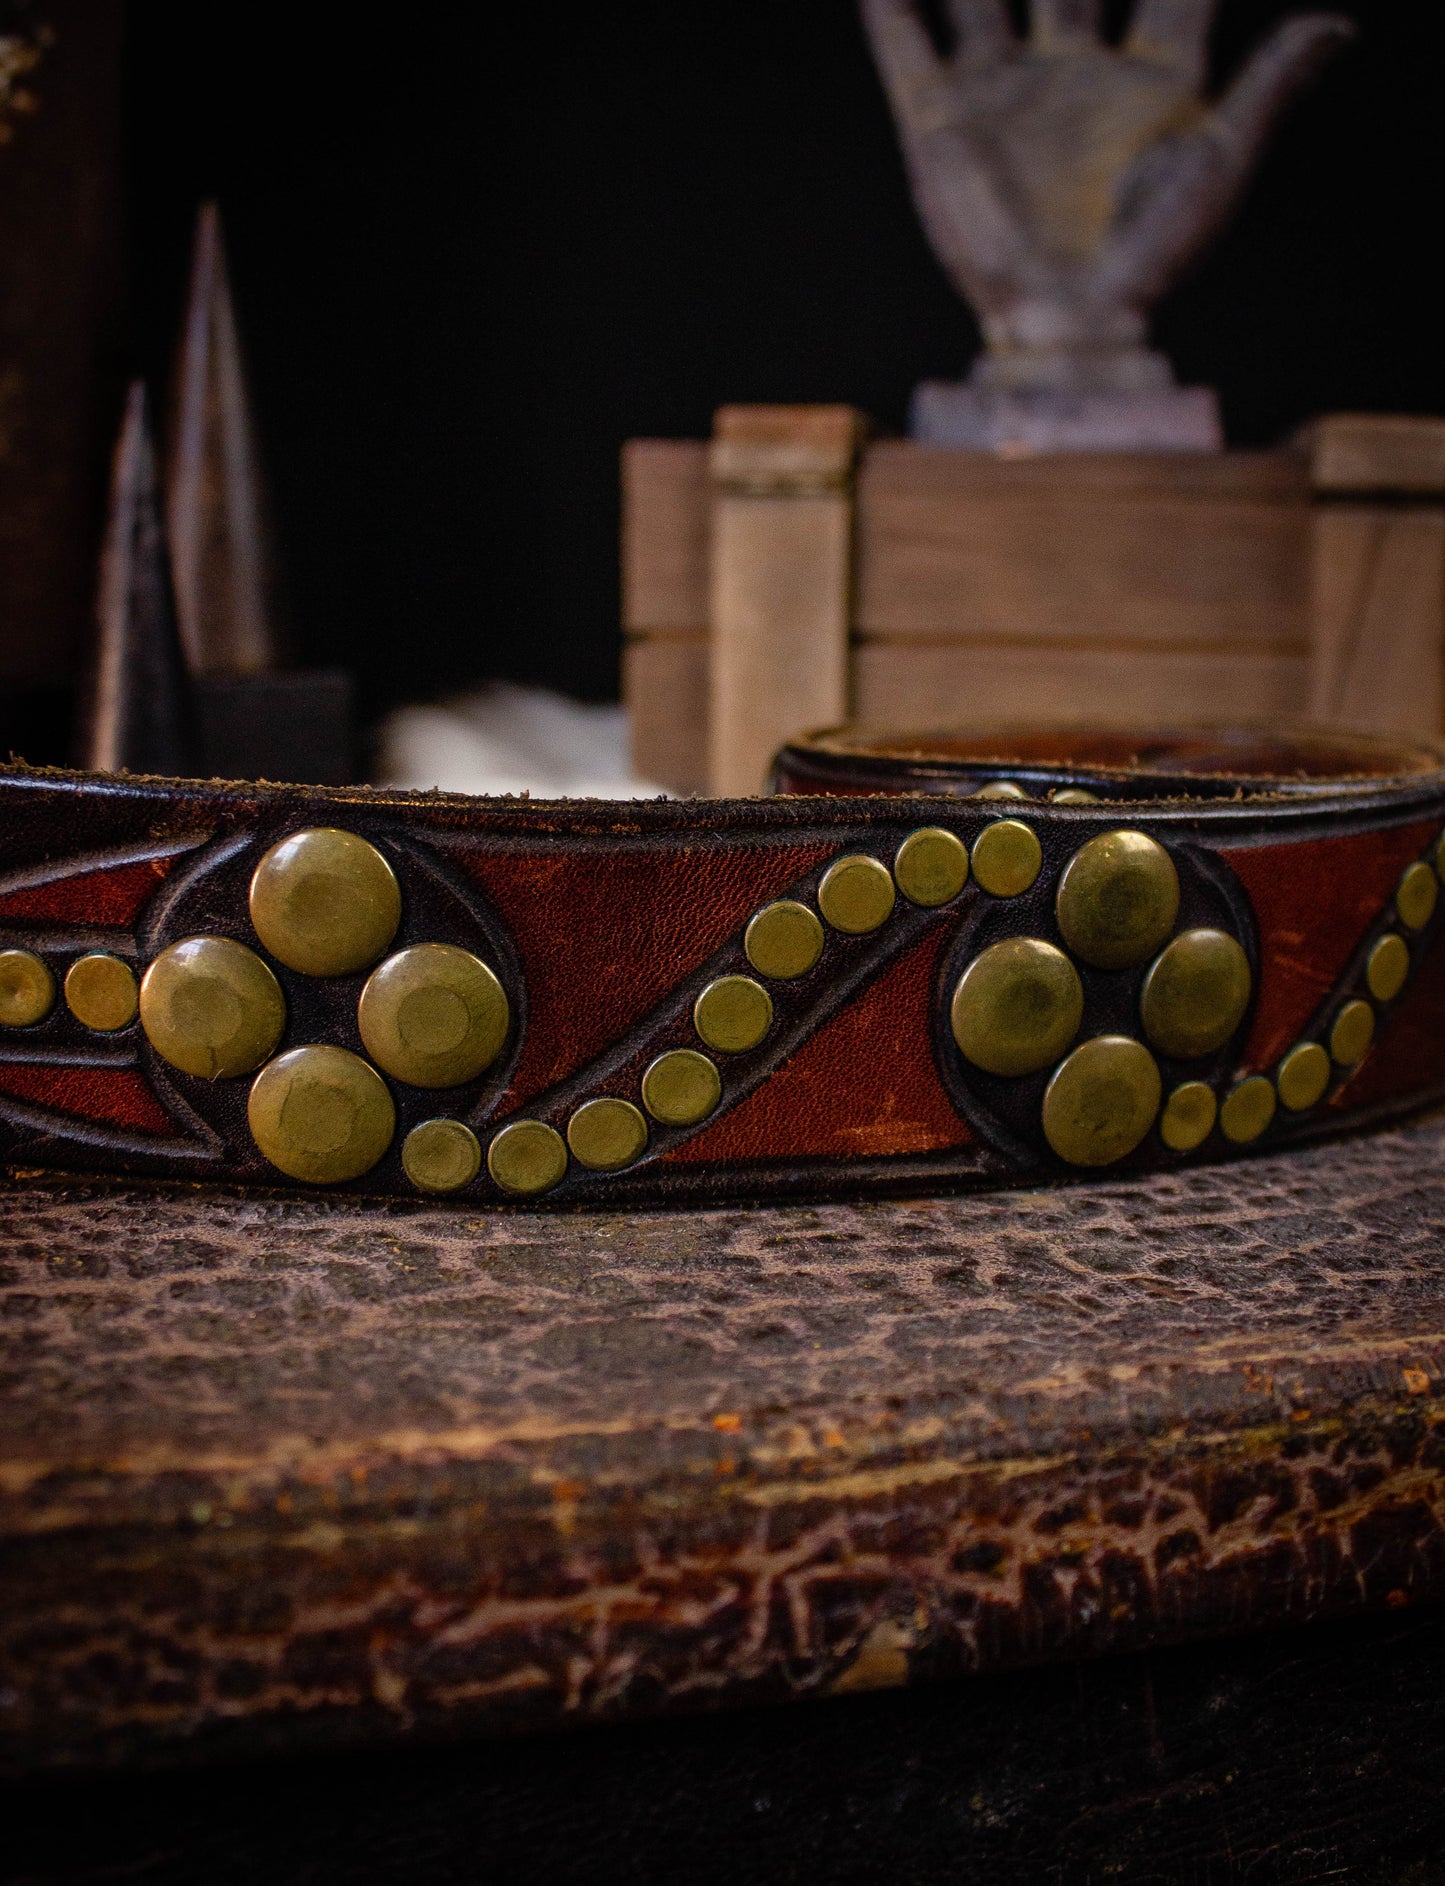 Vintage Brown Leather Belt with Brass Detailing